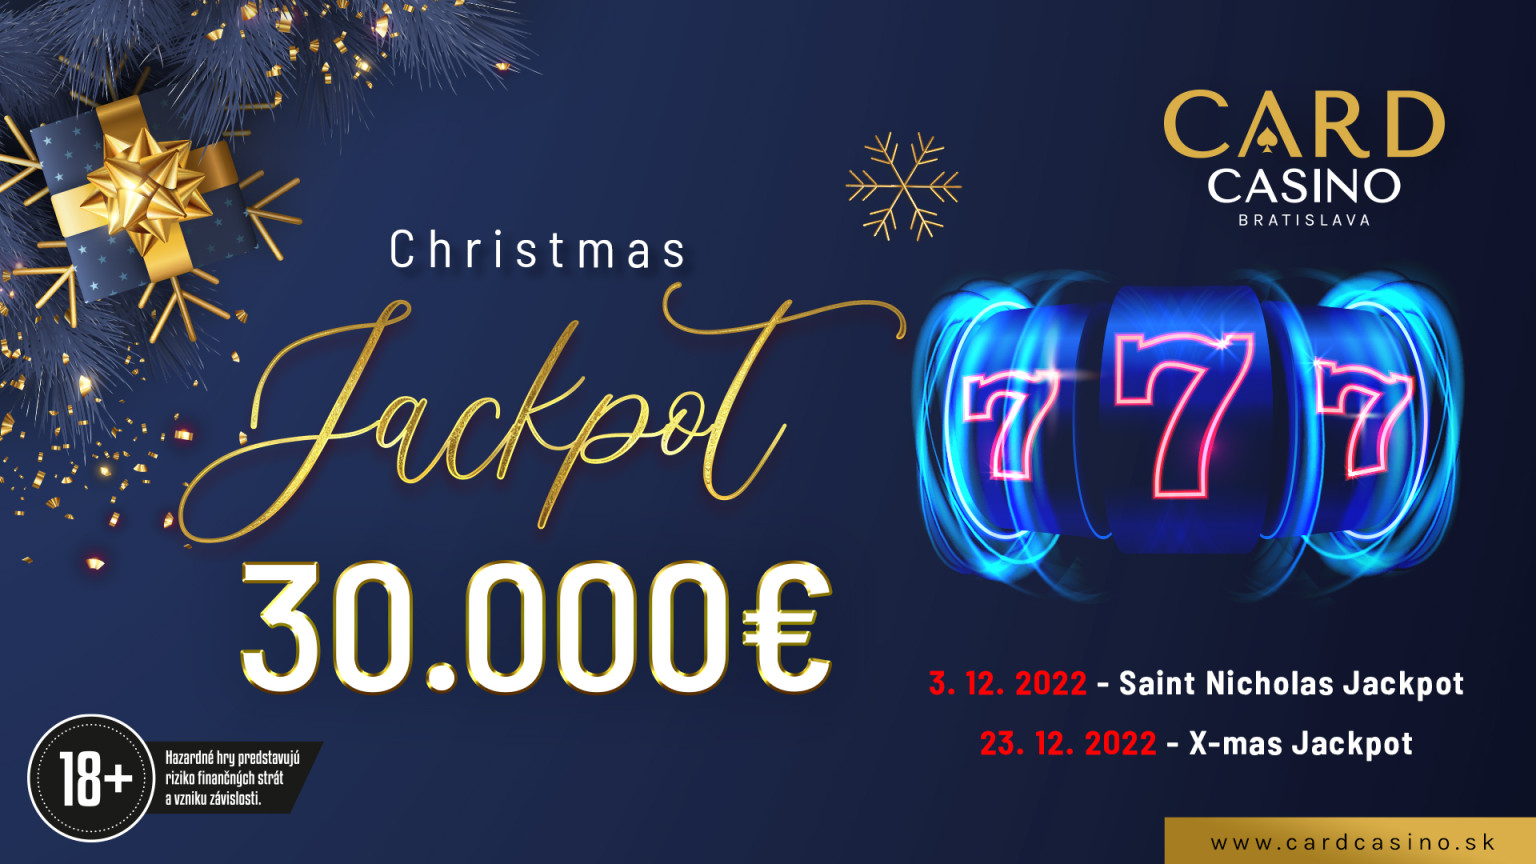 Christmas JACKPOT 30.000€ at December